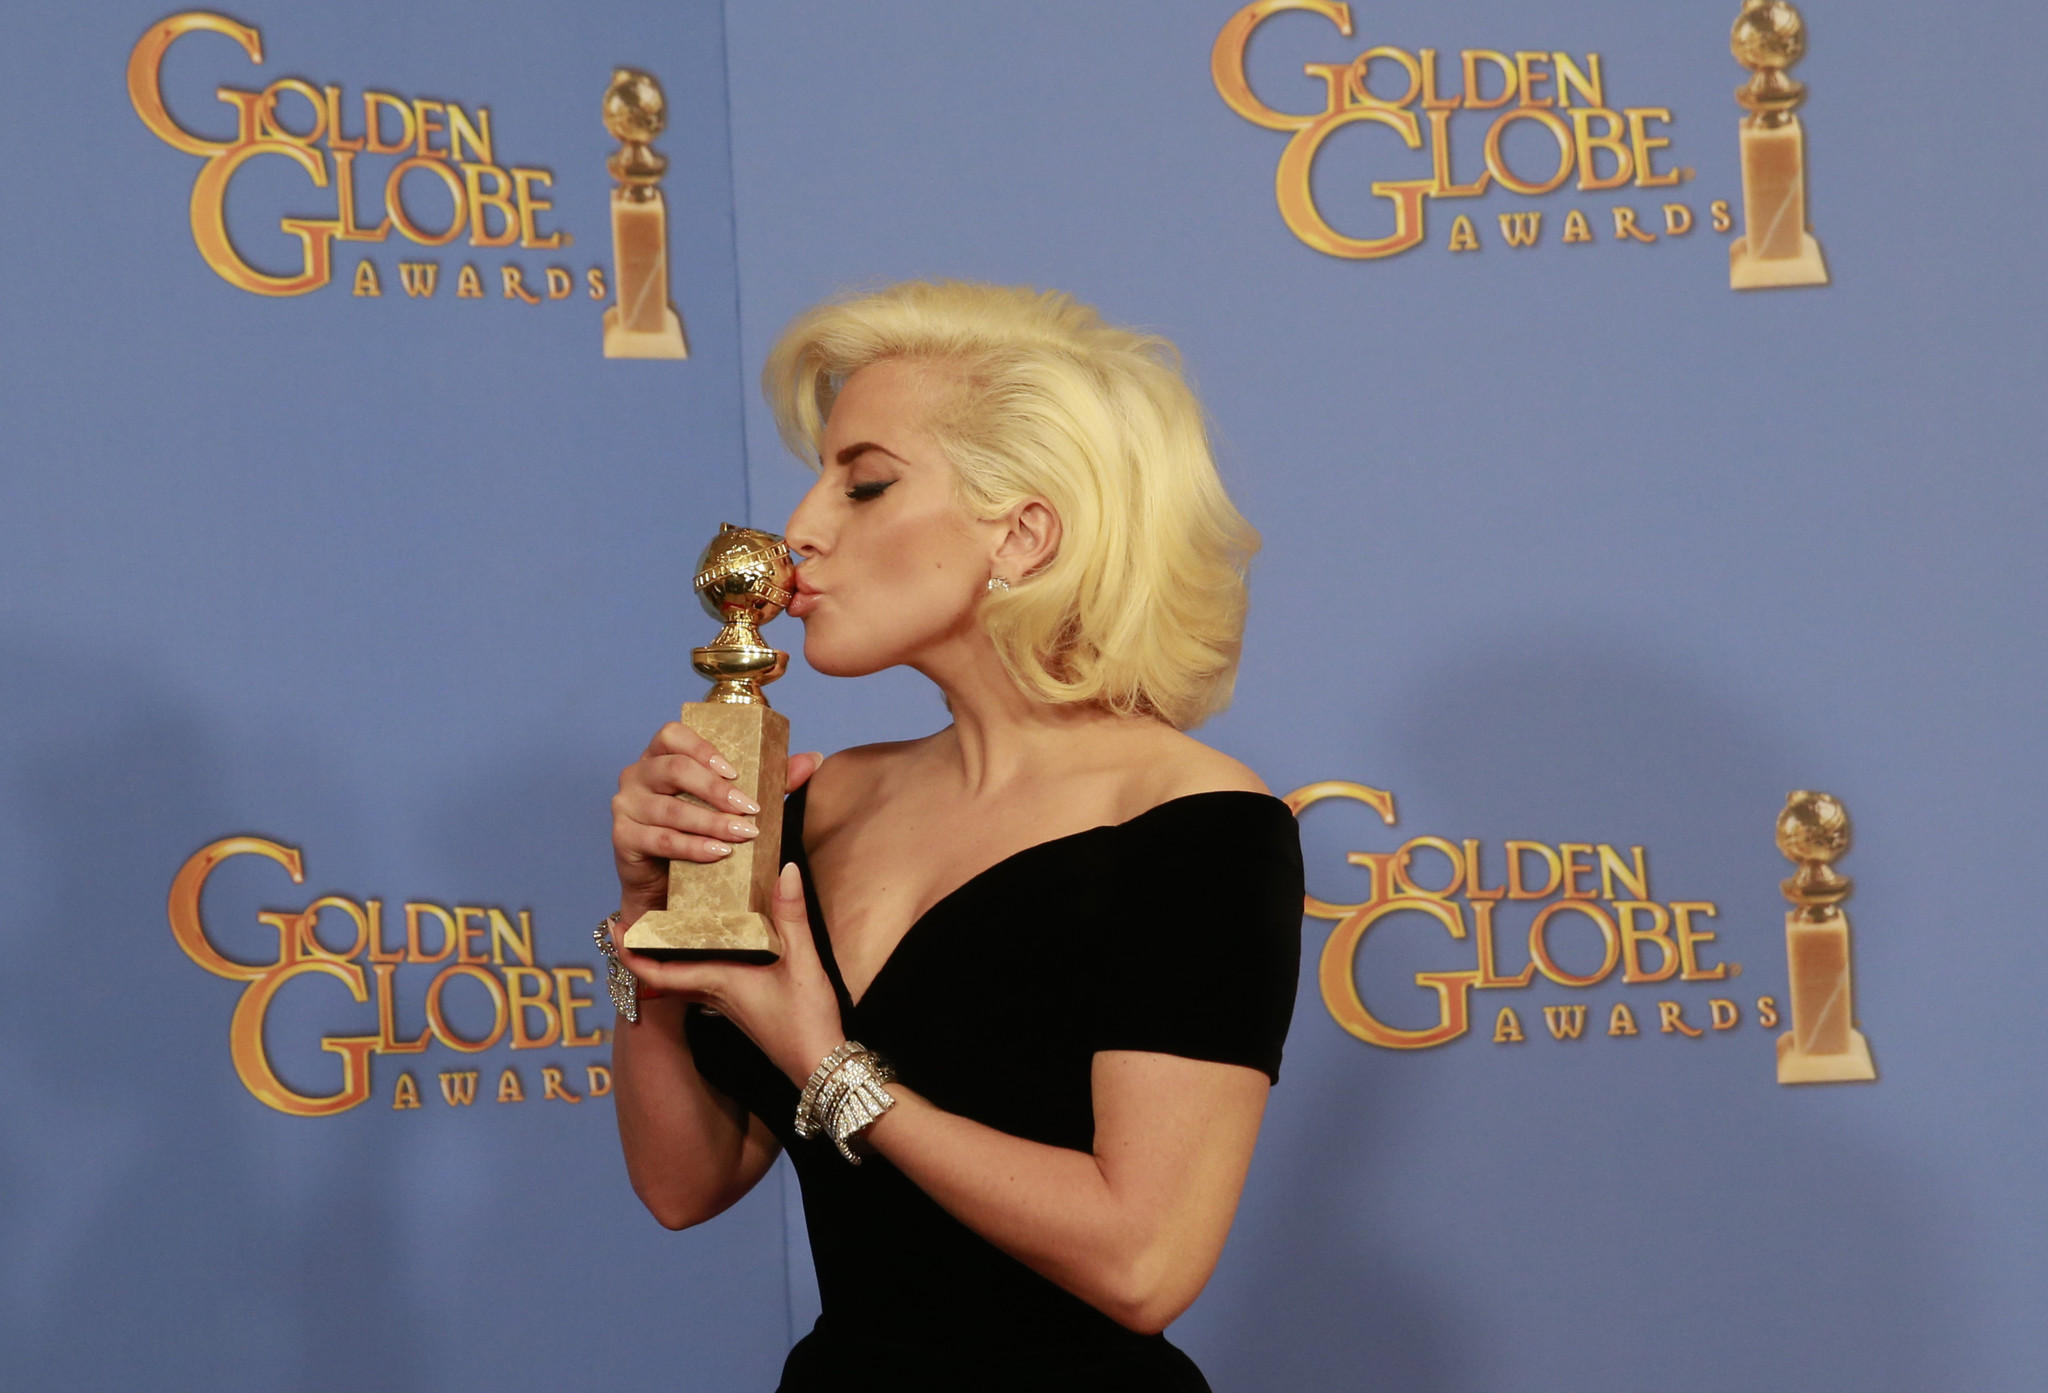 Golden Globes 2016: Complete list of nominees - LA Times2048 x 1393